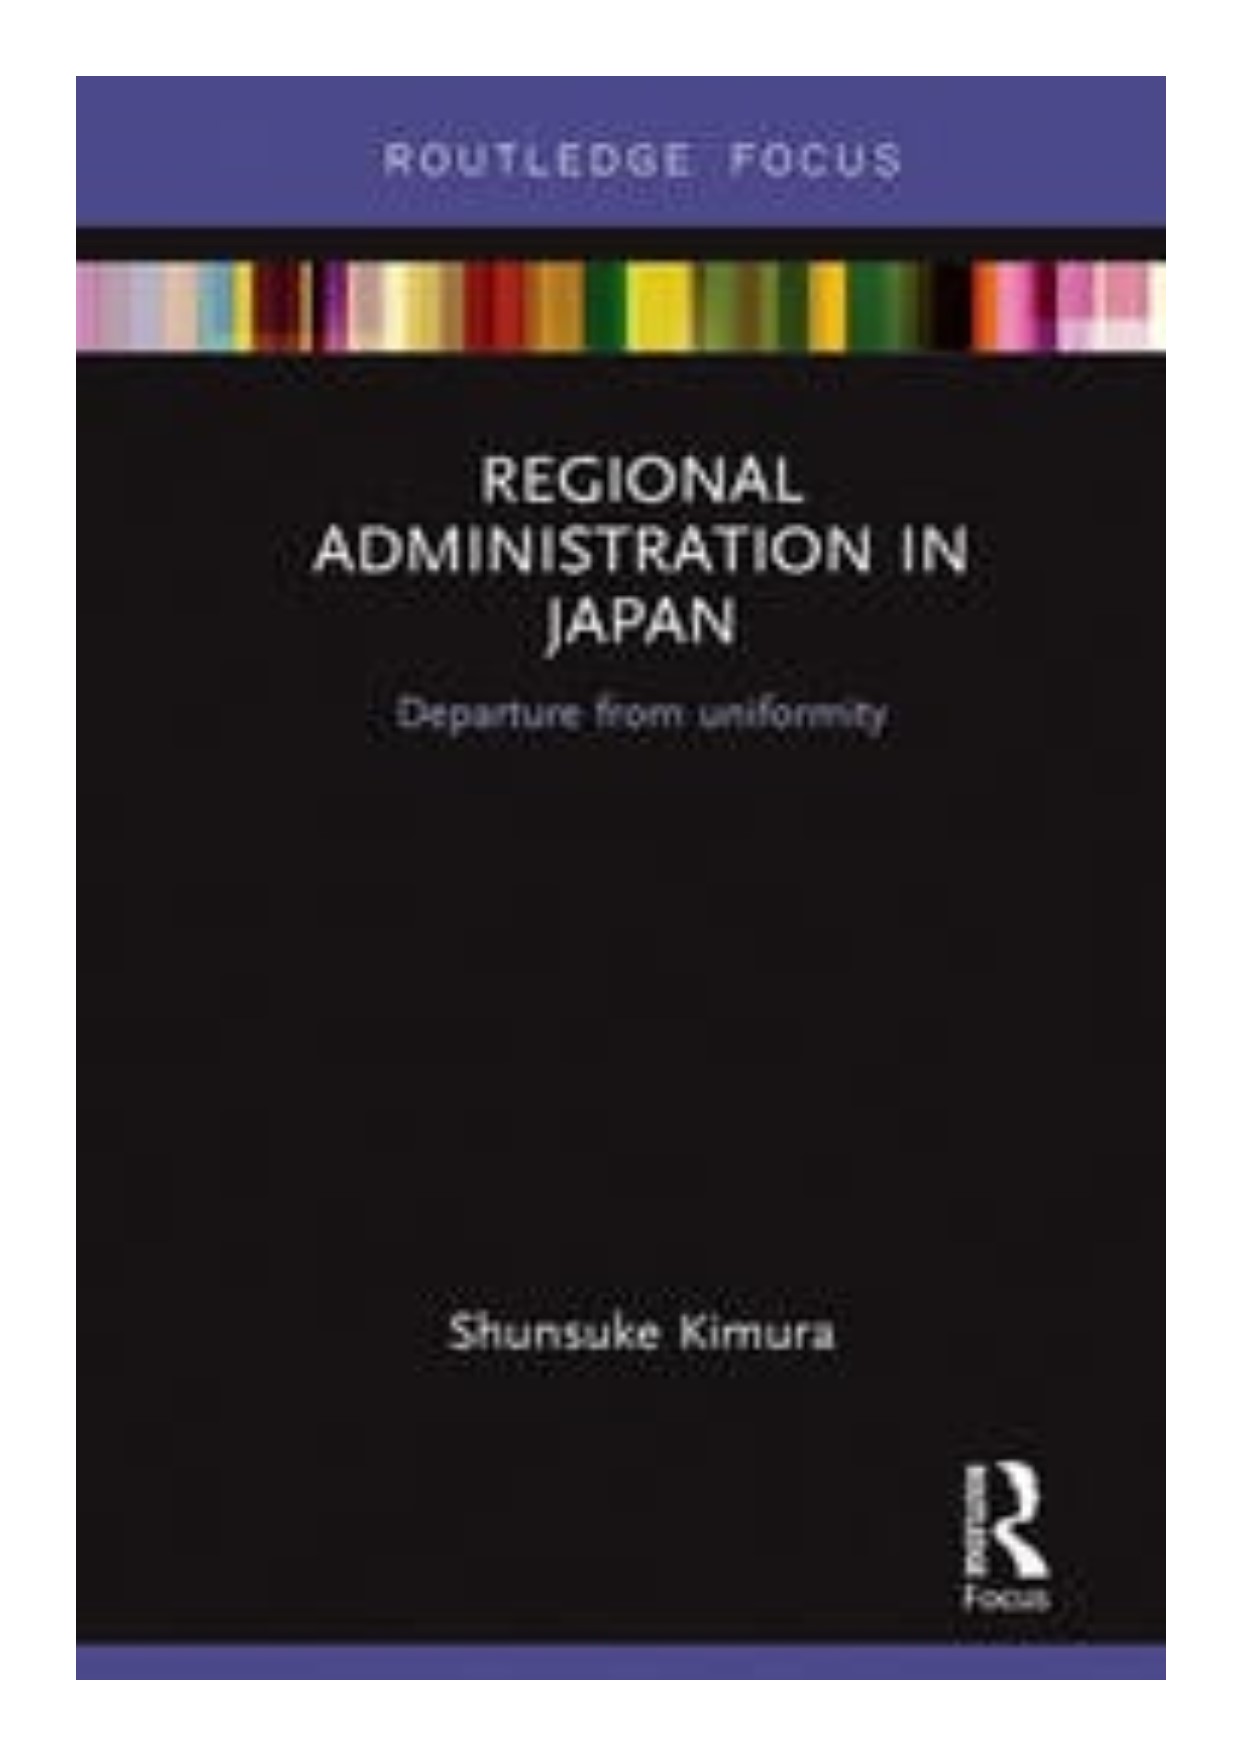 Regional administration in Japan departure from uniformity